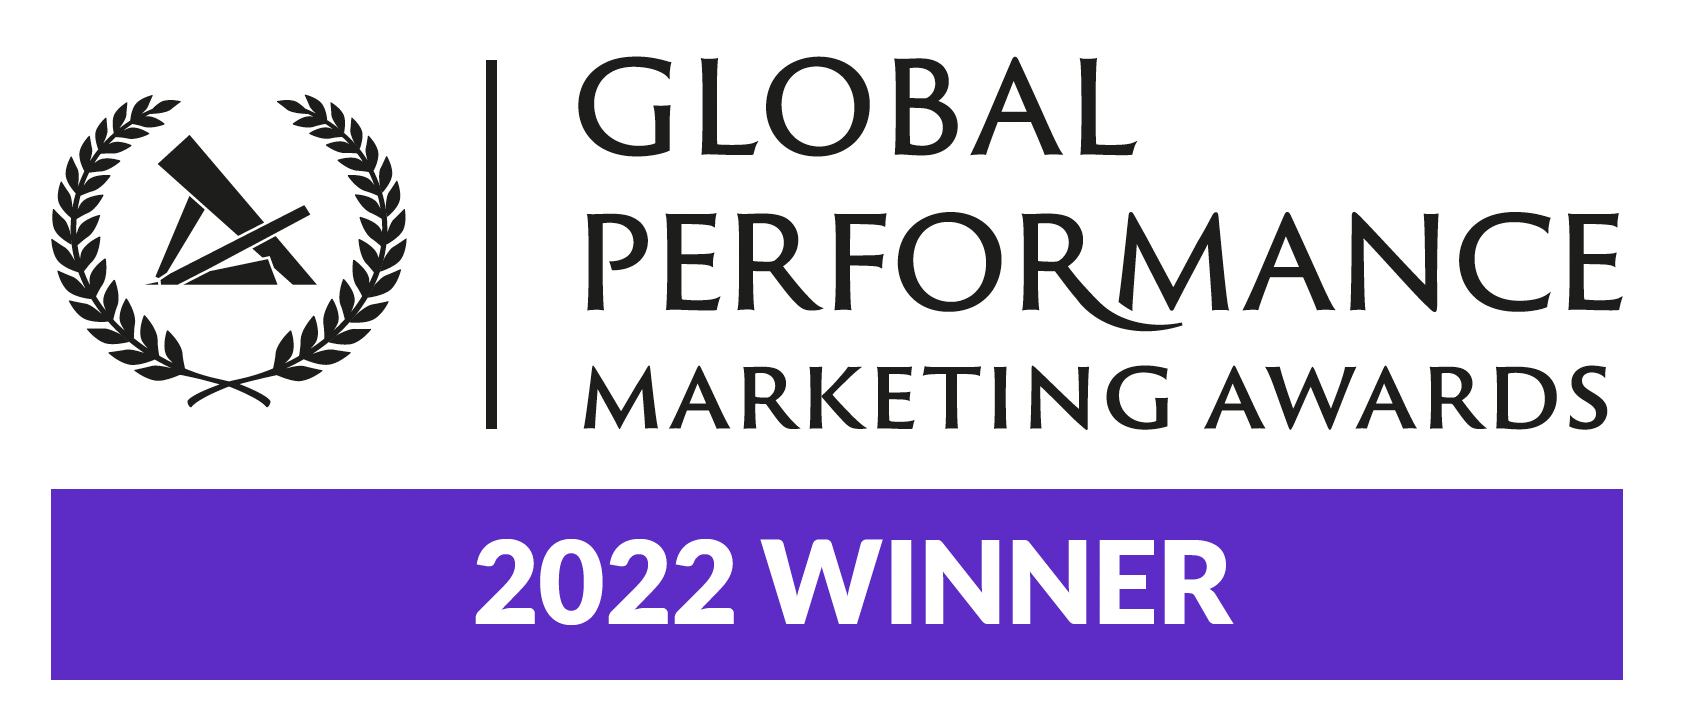 Global Performance Marketing Awards Winners Badge